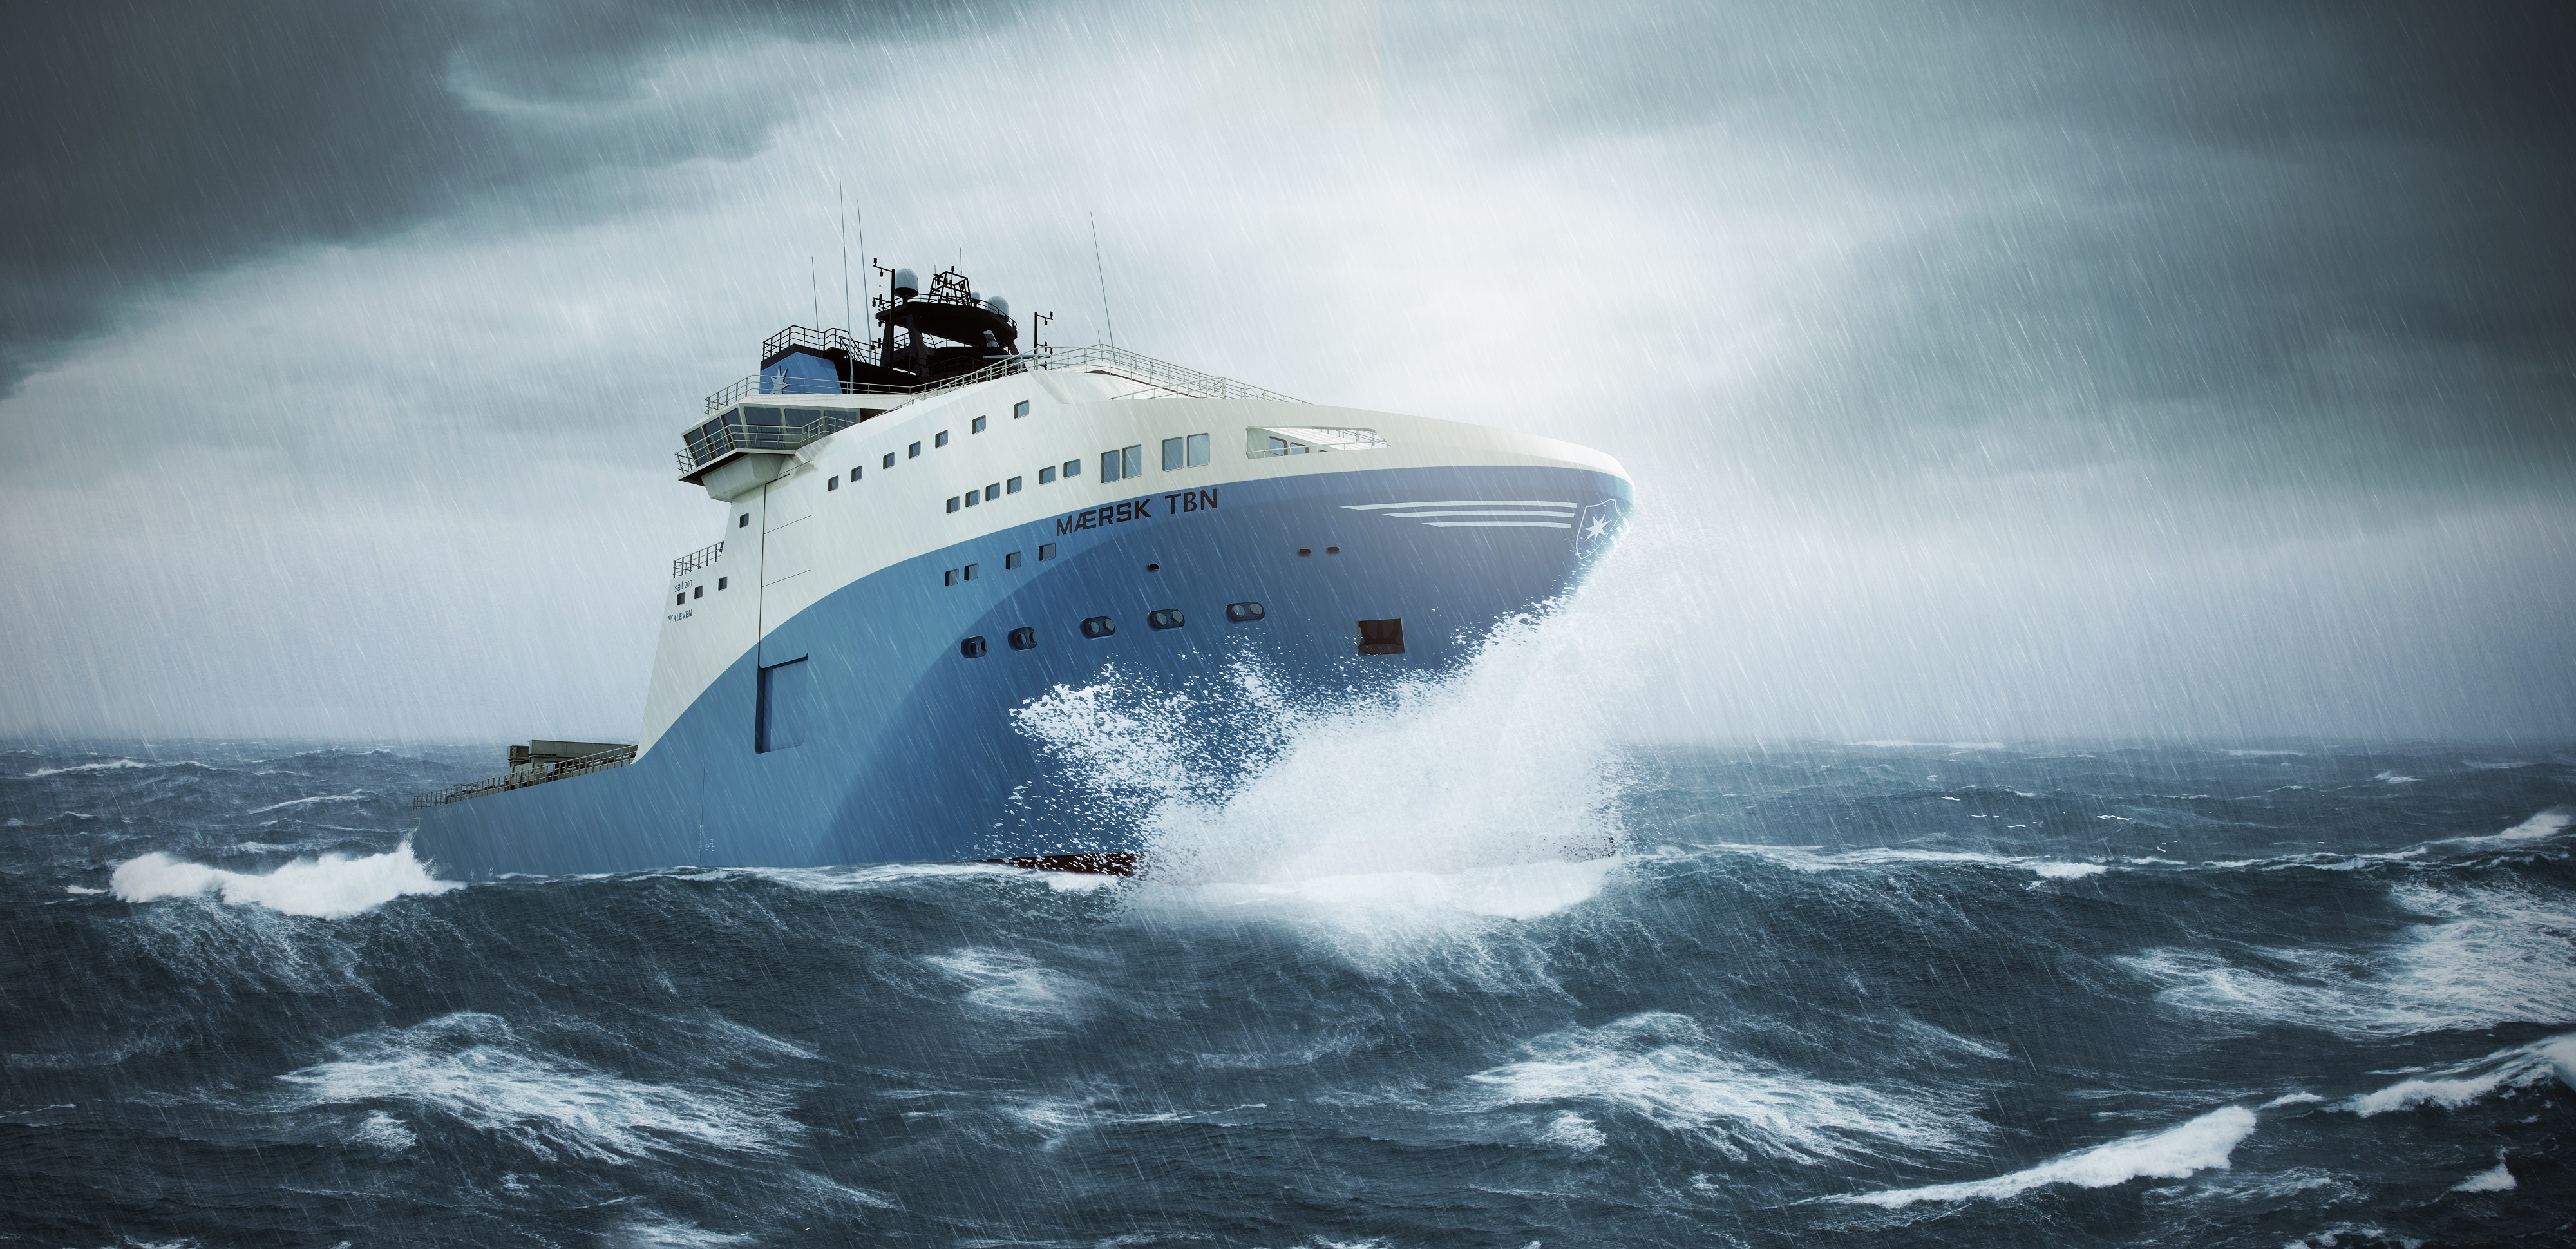 vehicles, ship, mærsk tbn, offshore support vessel, sea